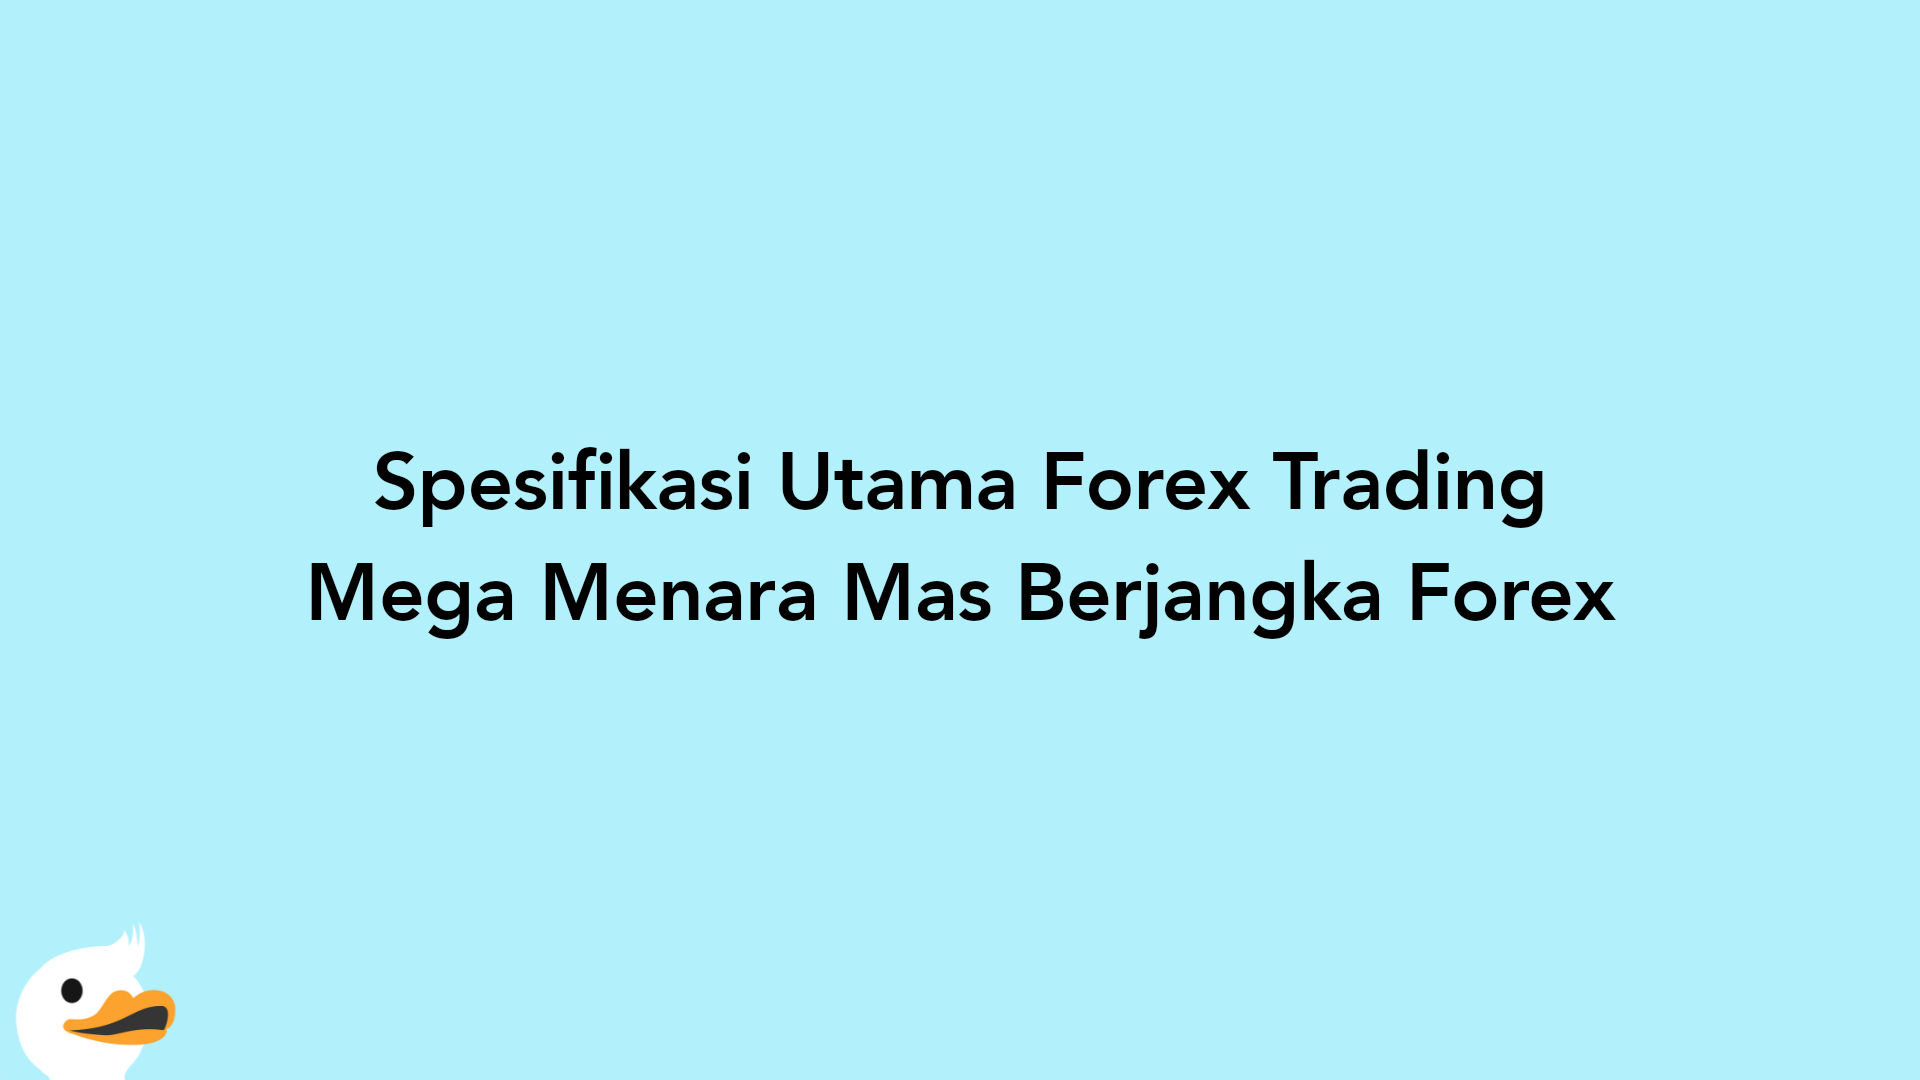 Spesifikasi Utama Forex Trading Mega Menara Mas Berjangka Forex